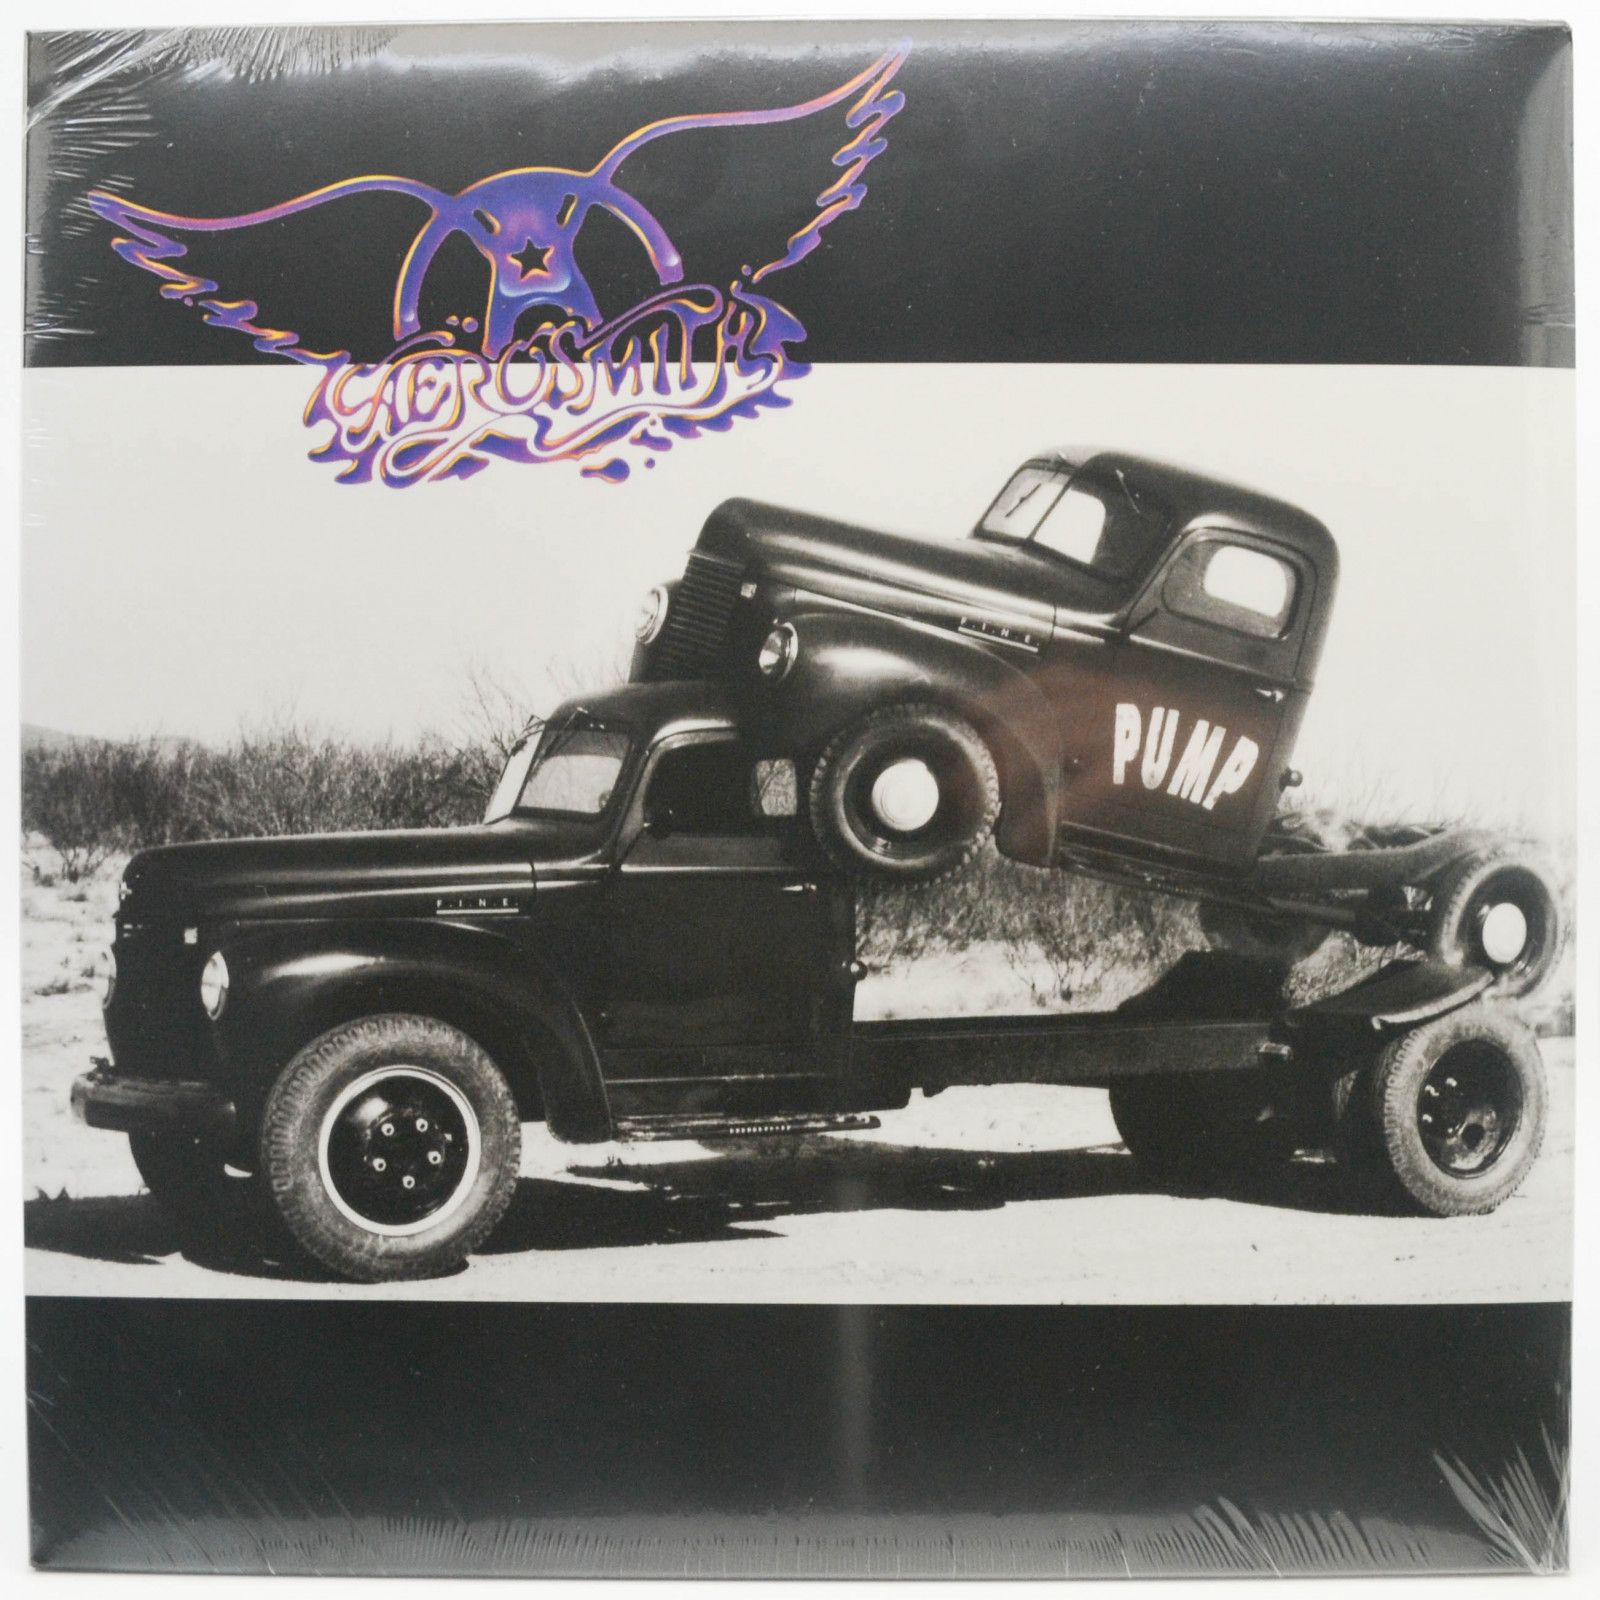 Aerosmith — Pump, 1989